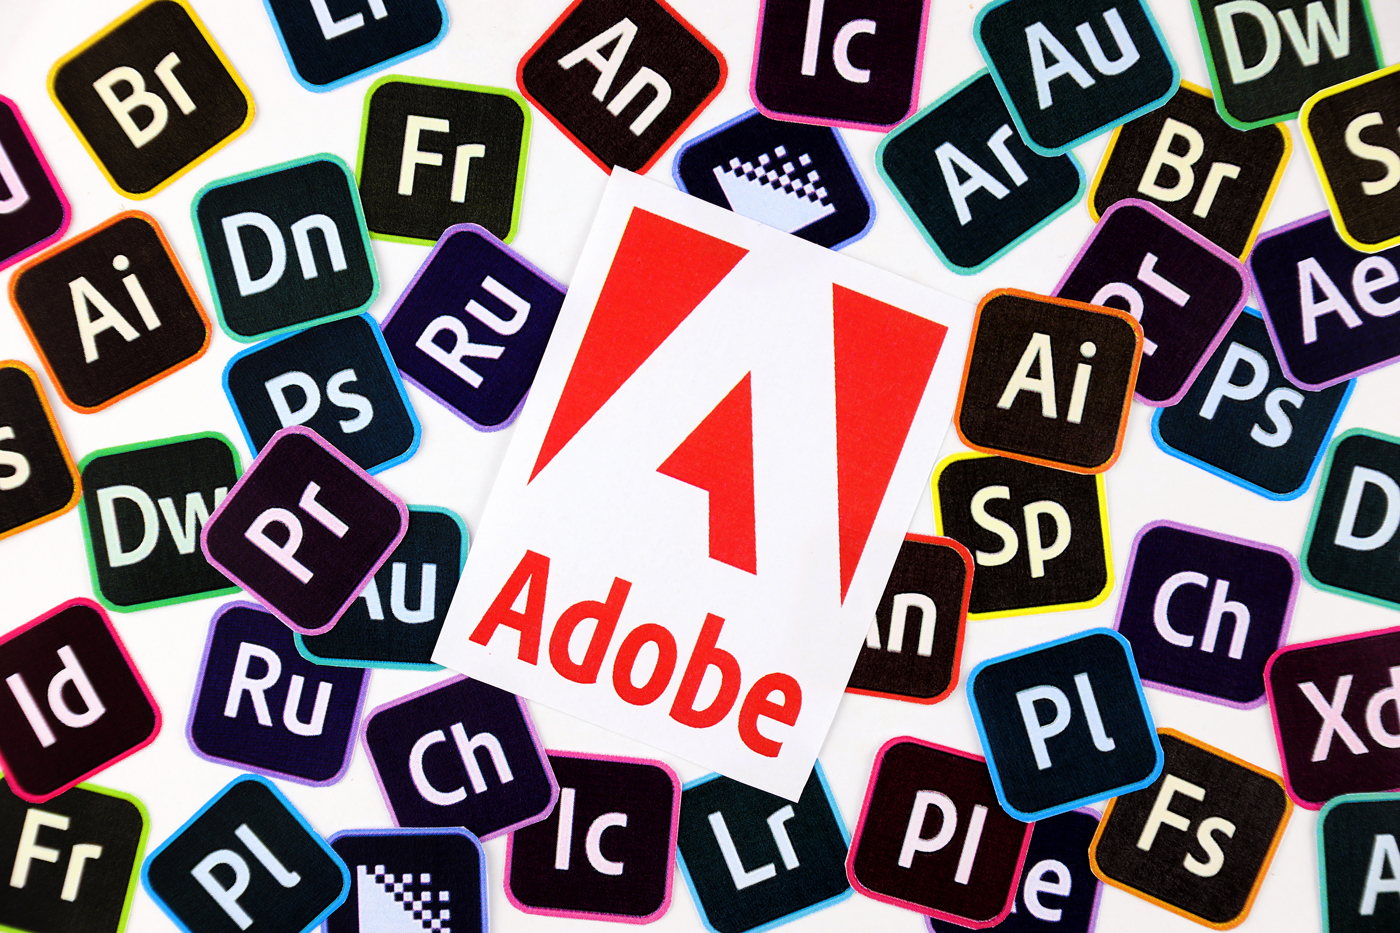 Adobe stock, ADBE stock, software stocks